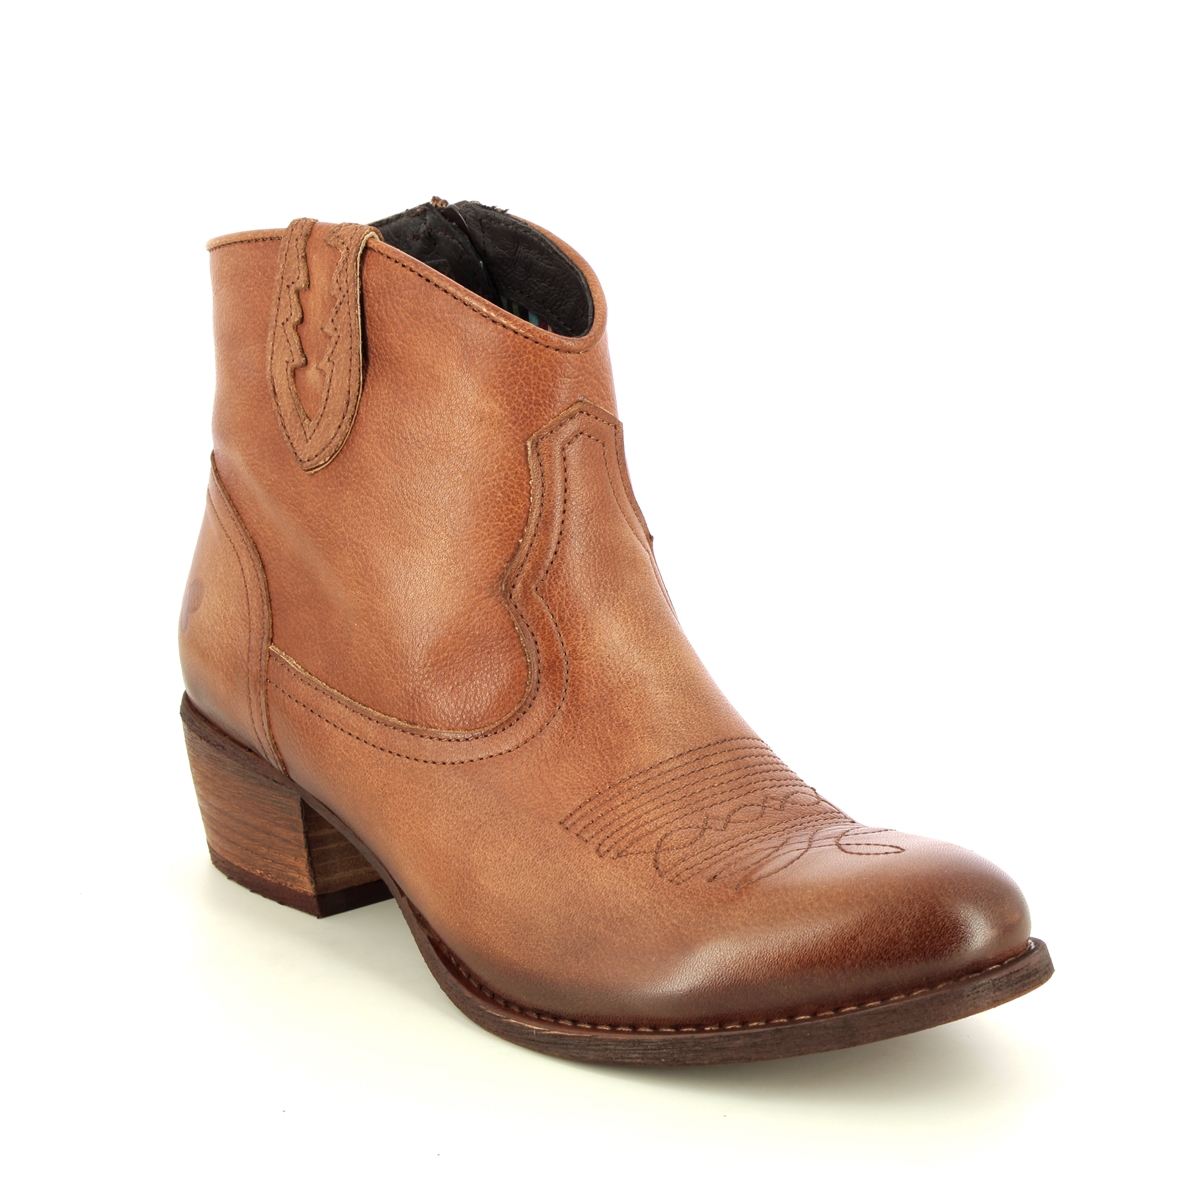 Felmini - Dresa  Cowboy (Tan Leather ) B504-11 In Size 40 In Plain Tan Leather